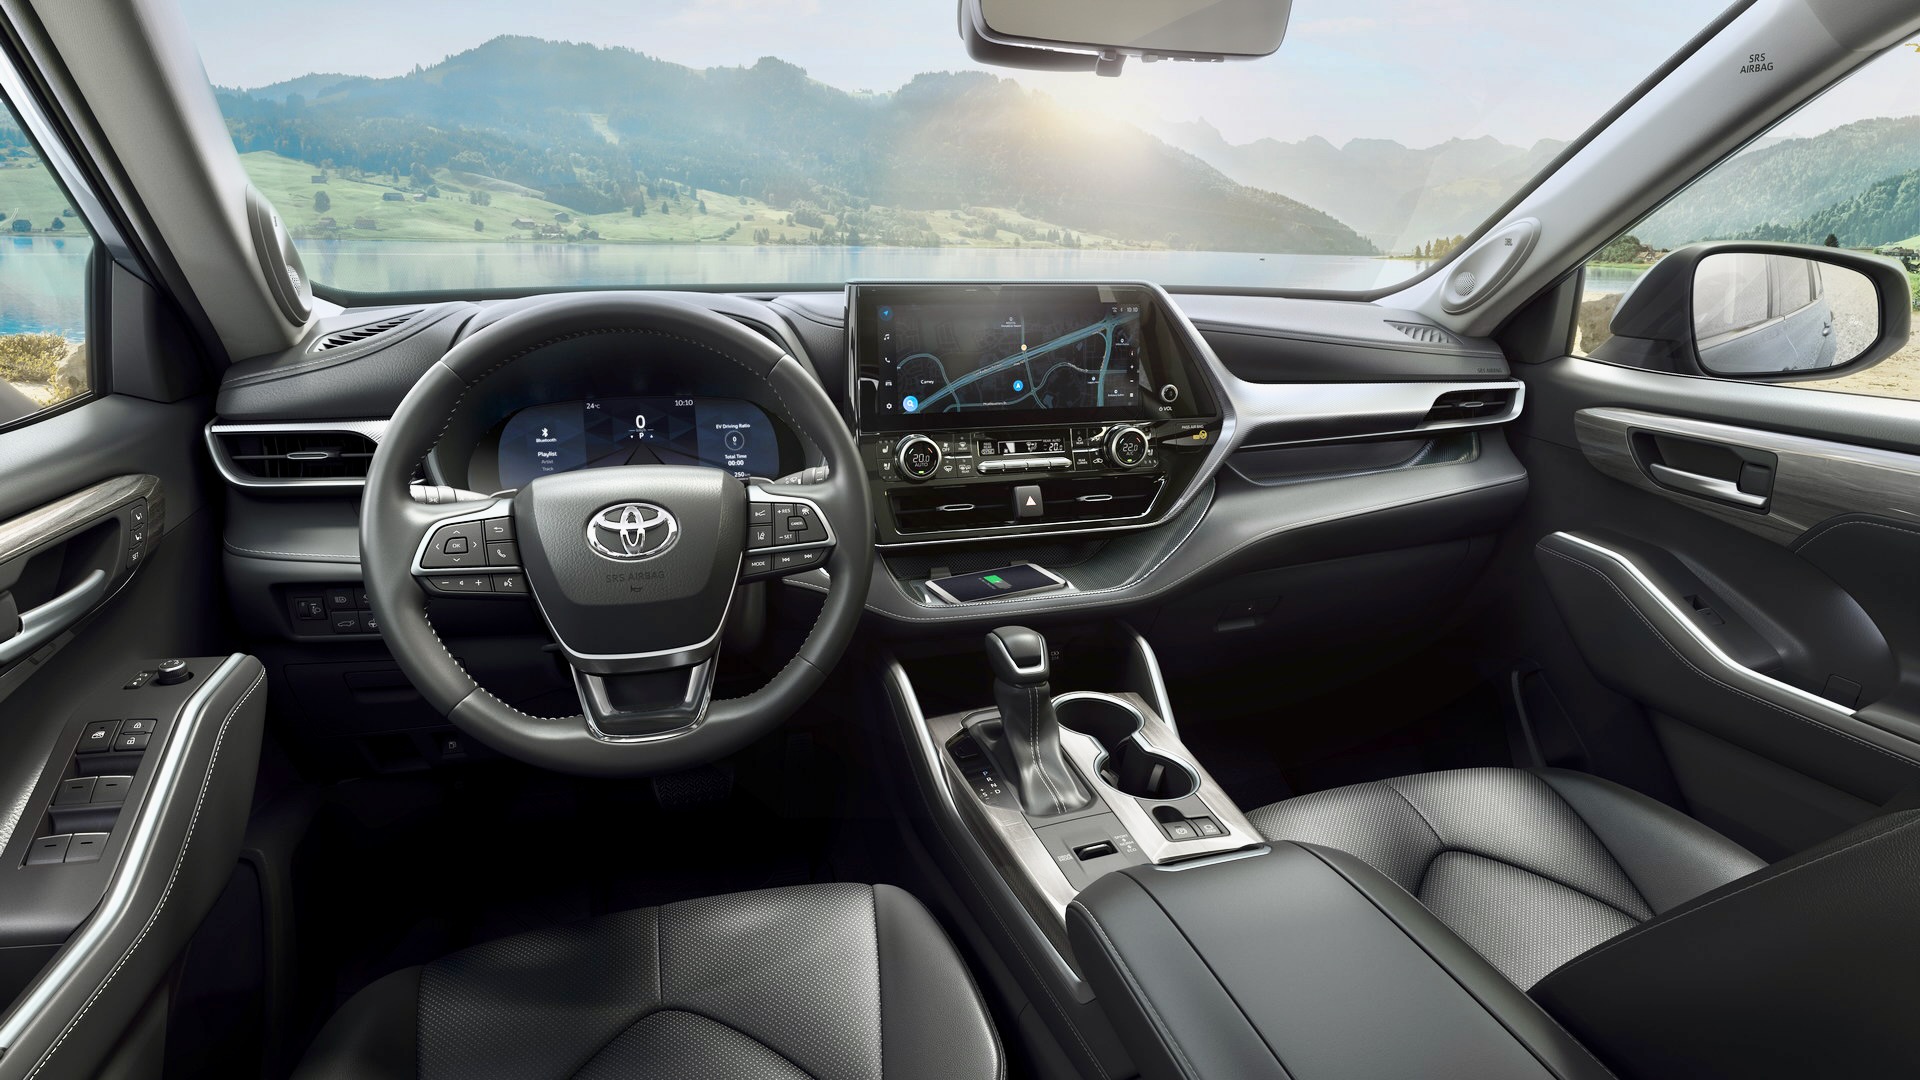 Toyota Kluger interior - Cockpit